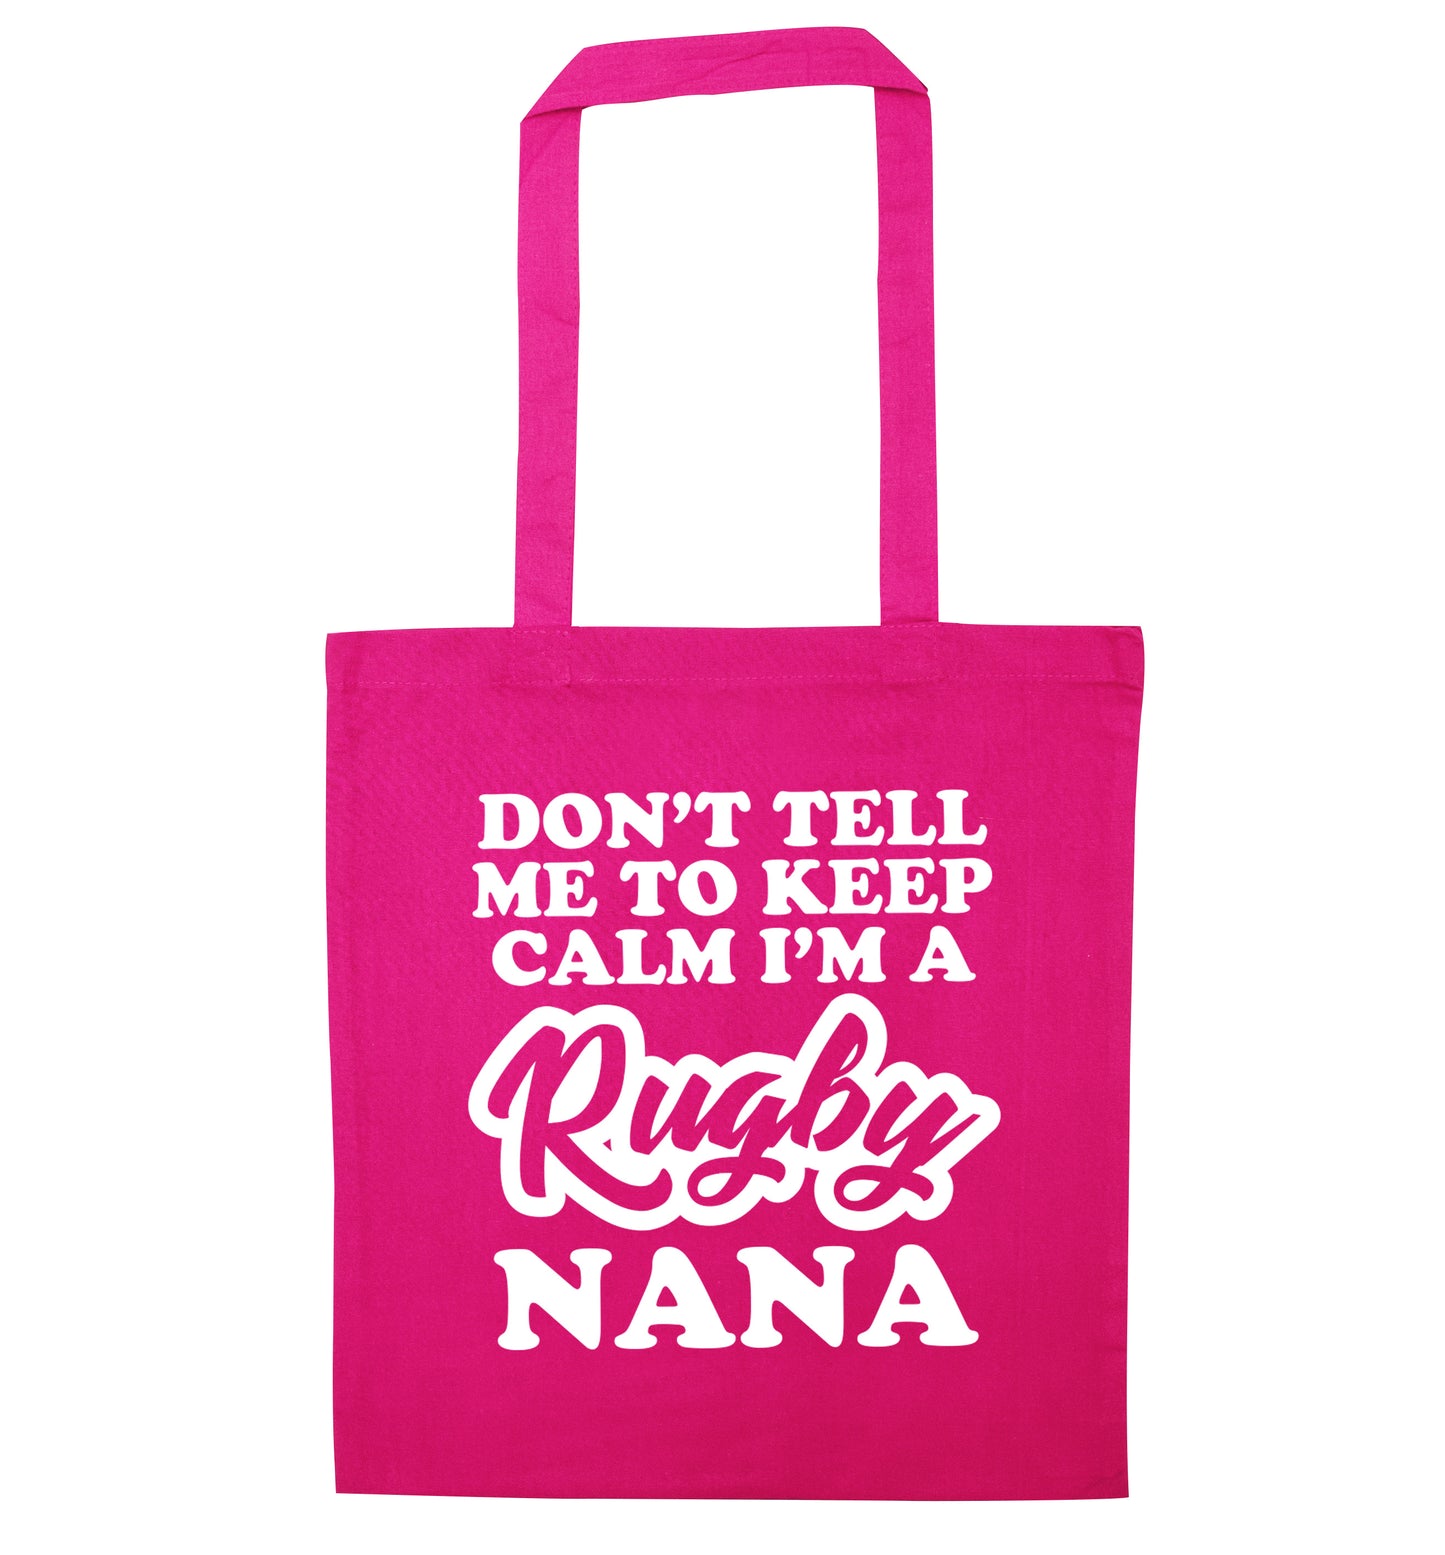 Don't tell me to keep calm I'm a rugby nana pink tote bag